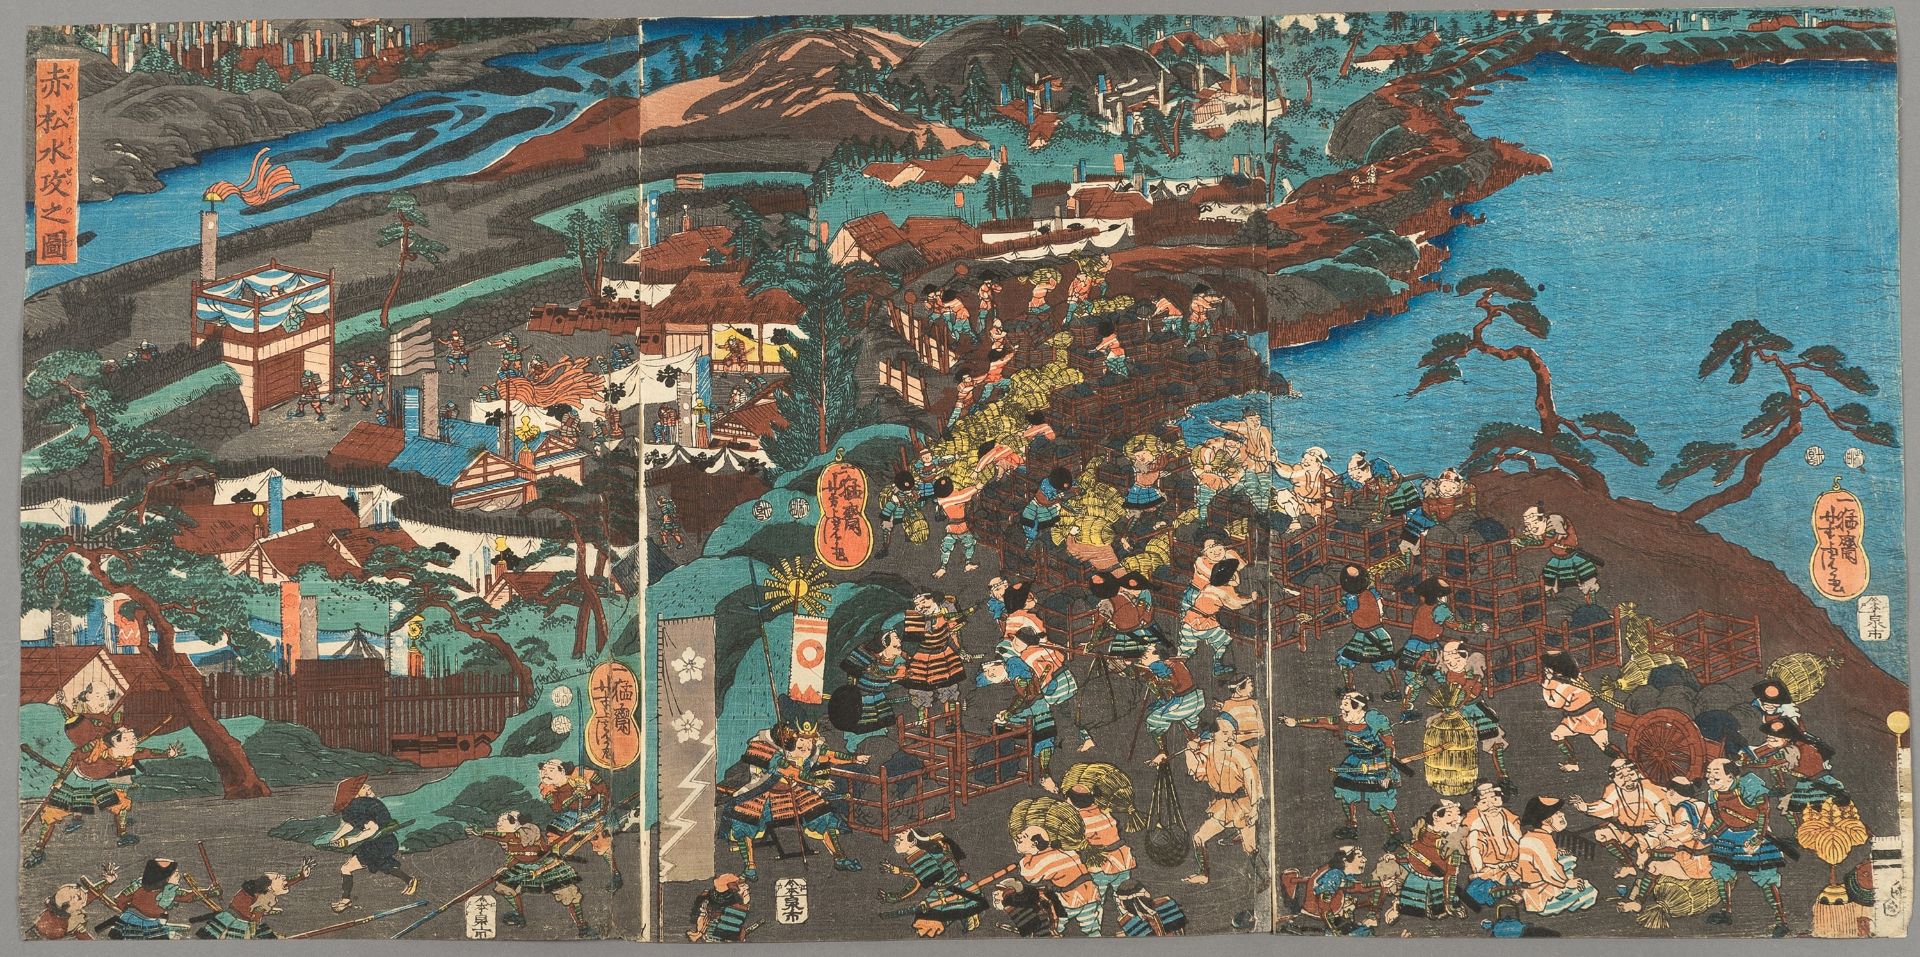 YOSHITORA: A TRIPTYCH OF FLOODING THE CASTLE OF AKAMATSU